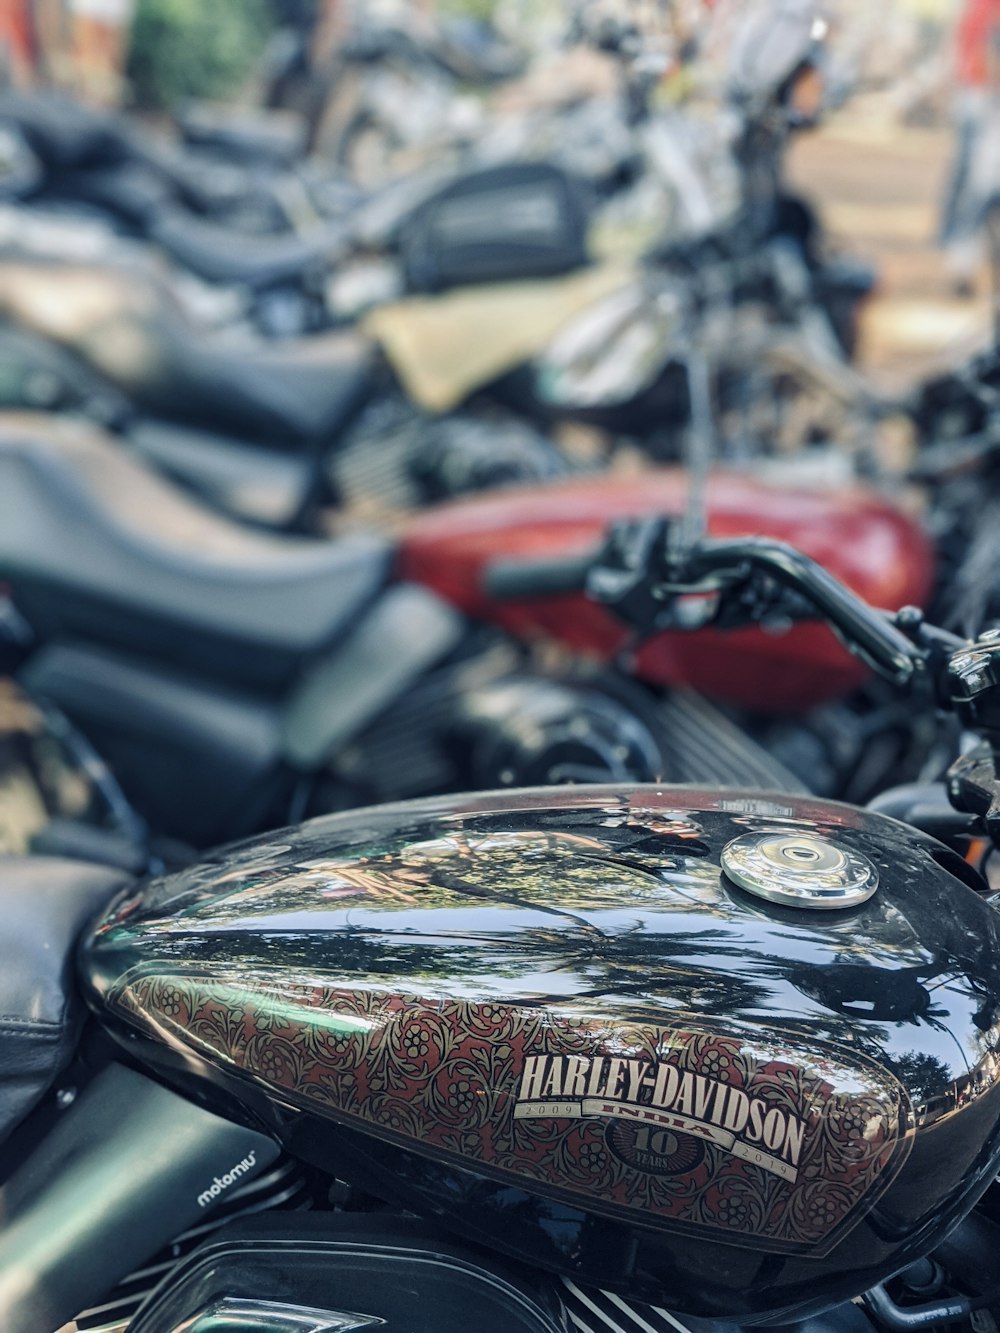 black and red harley davidson motorcycle